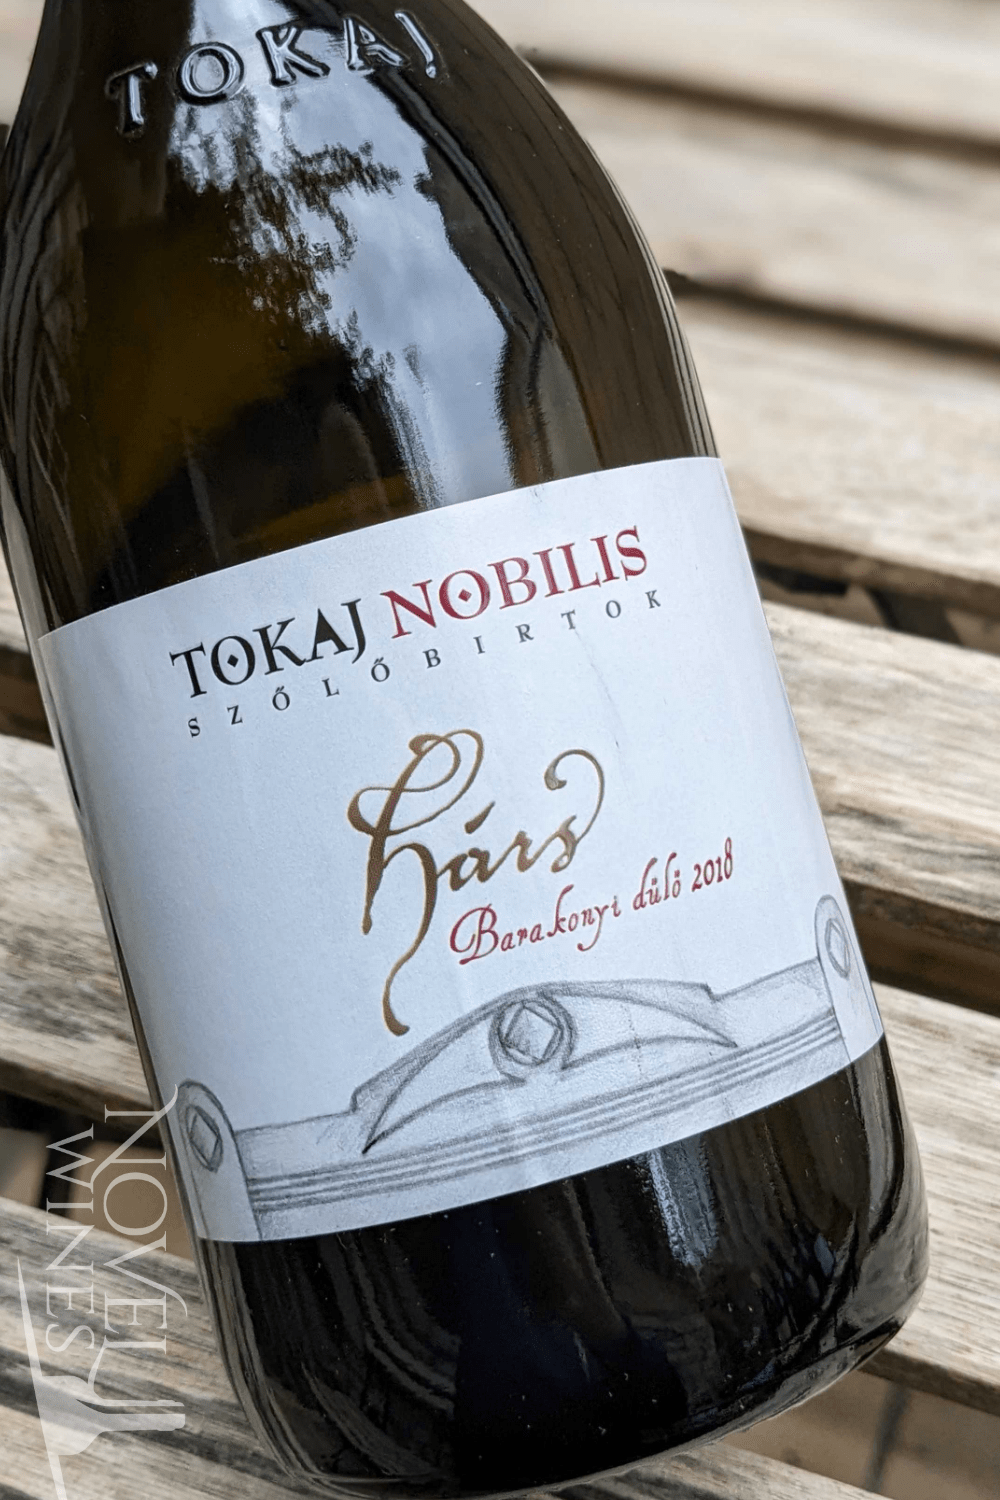 Tokaj Nobilis White Wine Tokaj Nobilis Barakonyi Single Vineyard Harslevelu 2018, Hungary